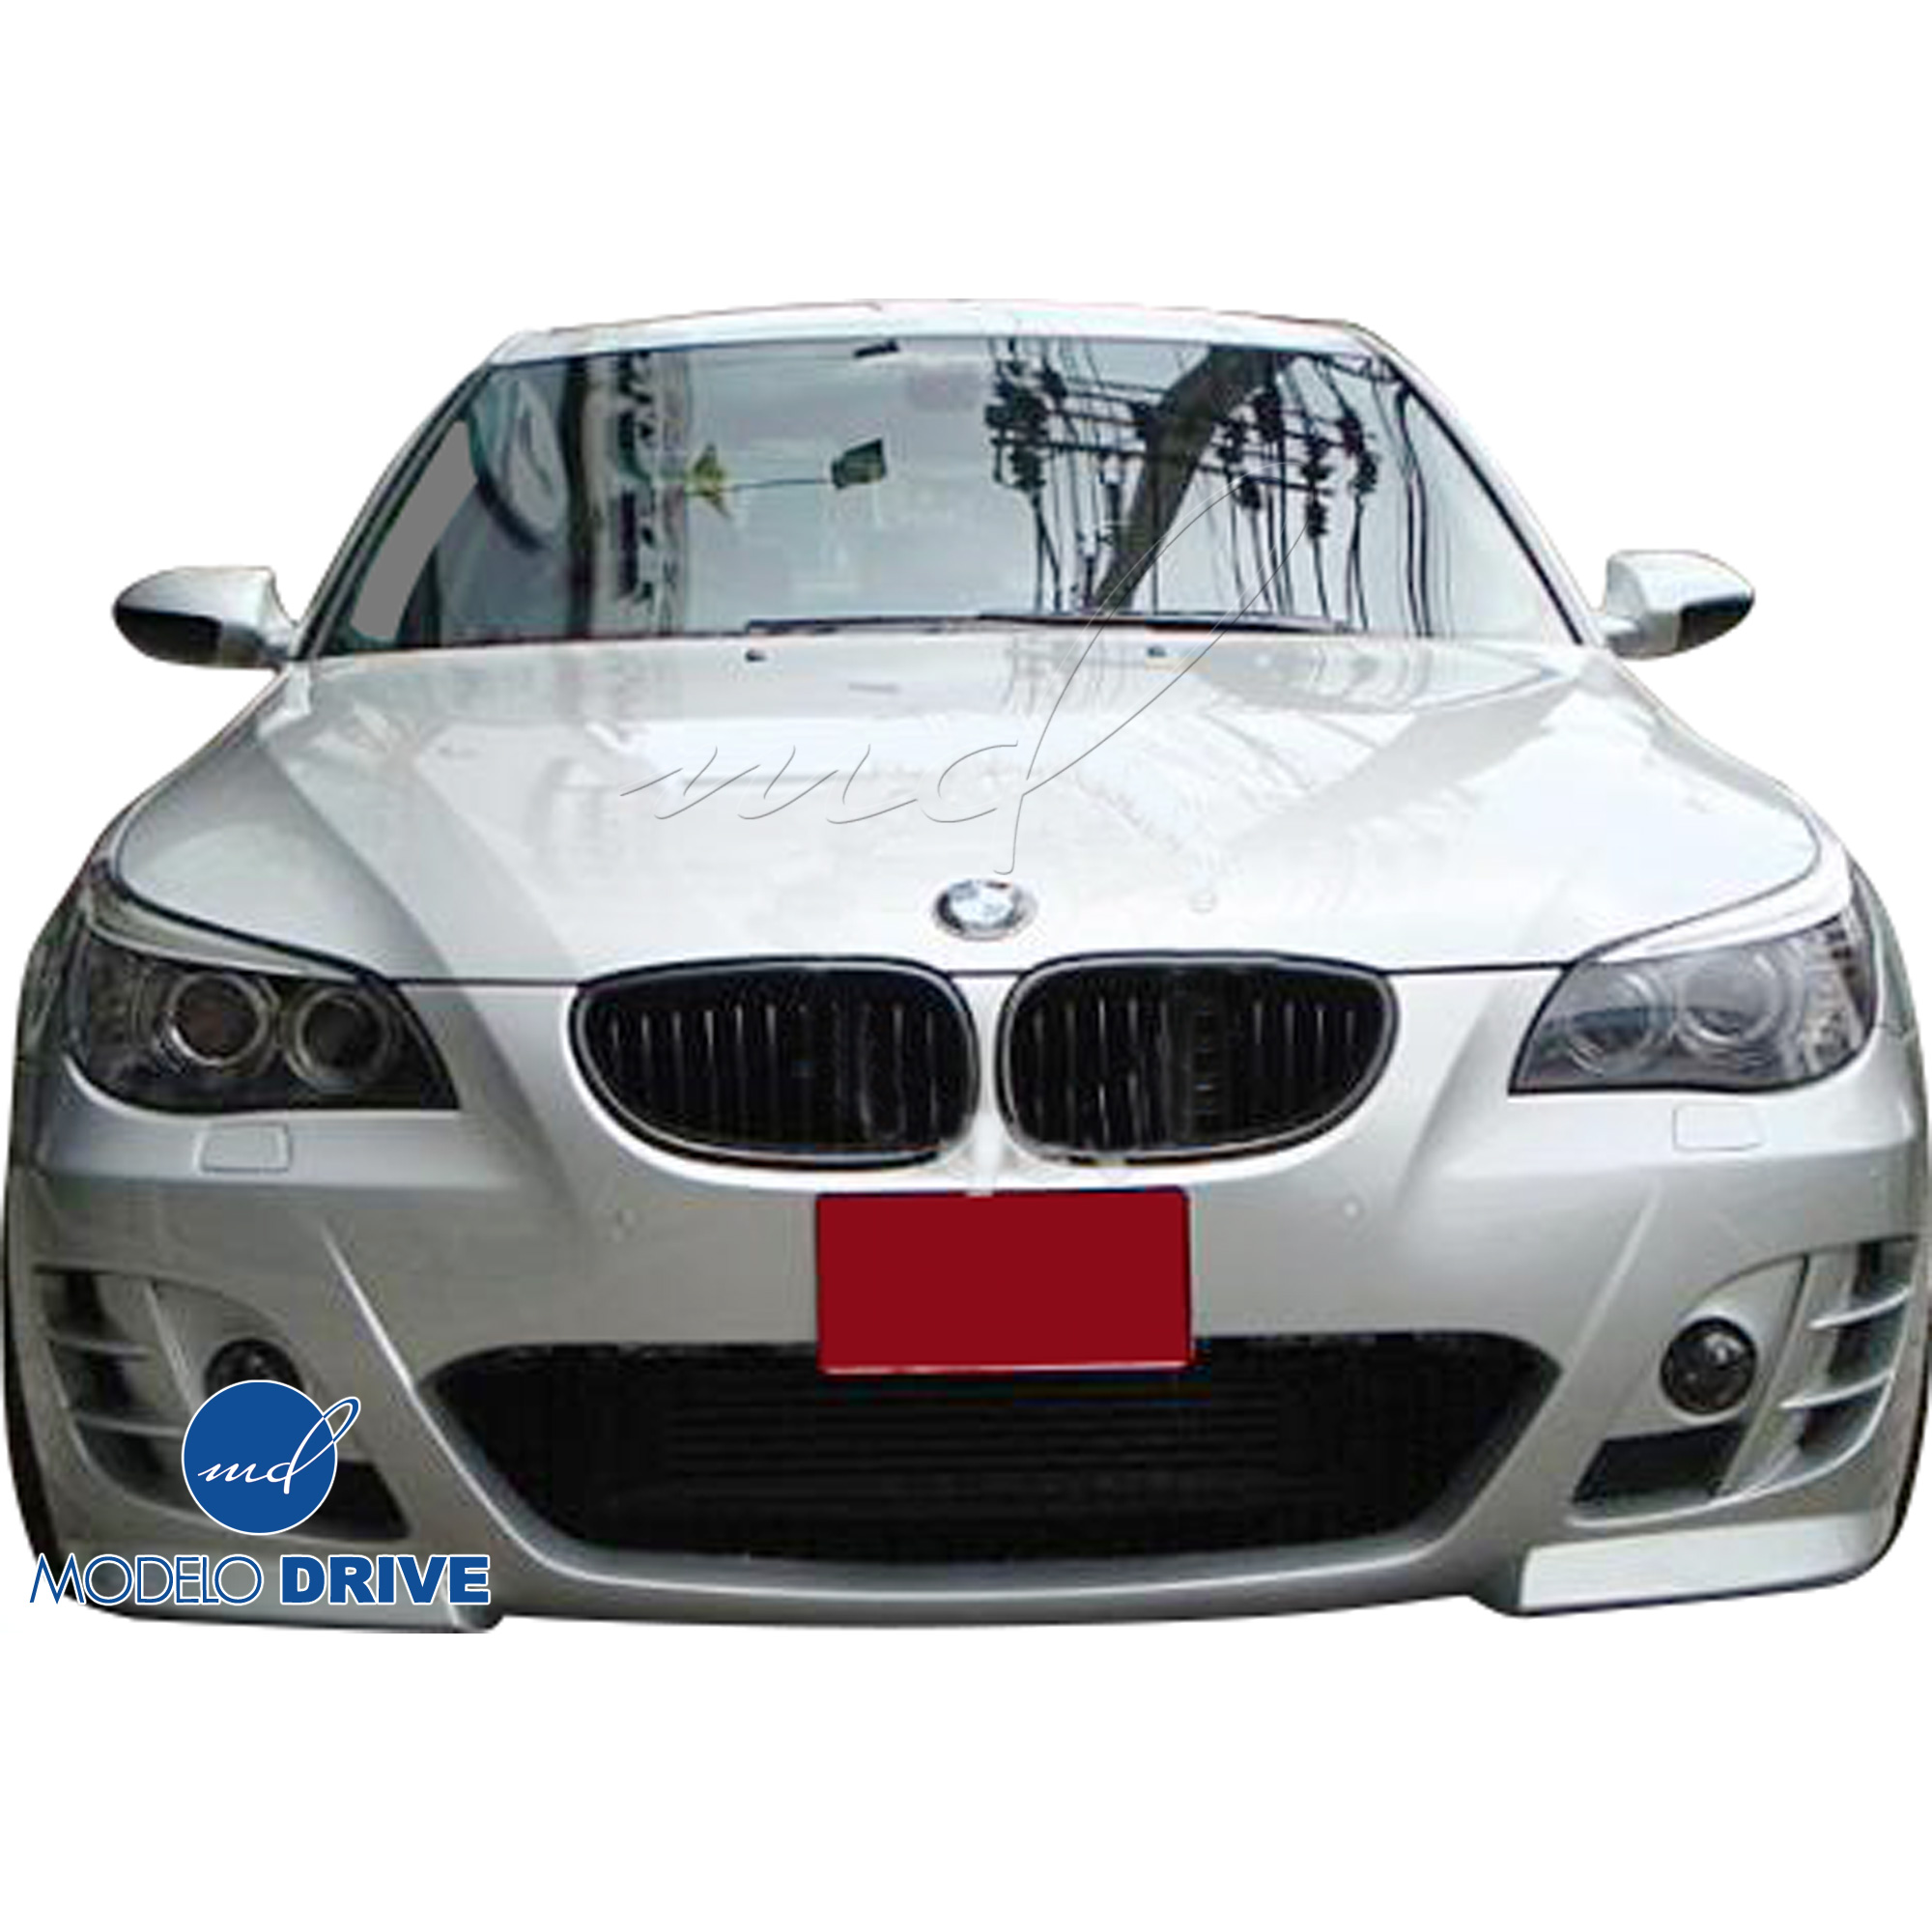 ModeloDrive FRP KERS Front Bumper > BMW 5-Series E60 2004-2010 > 4dr - Image 7